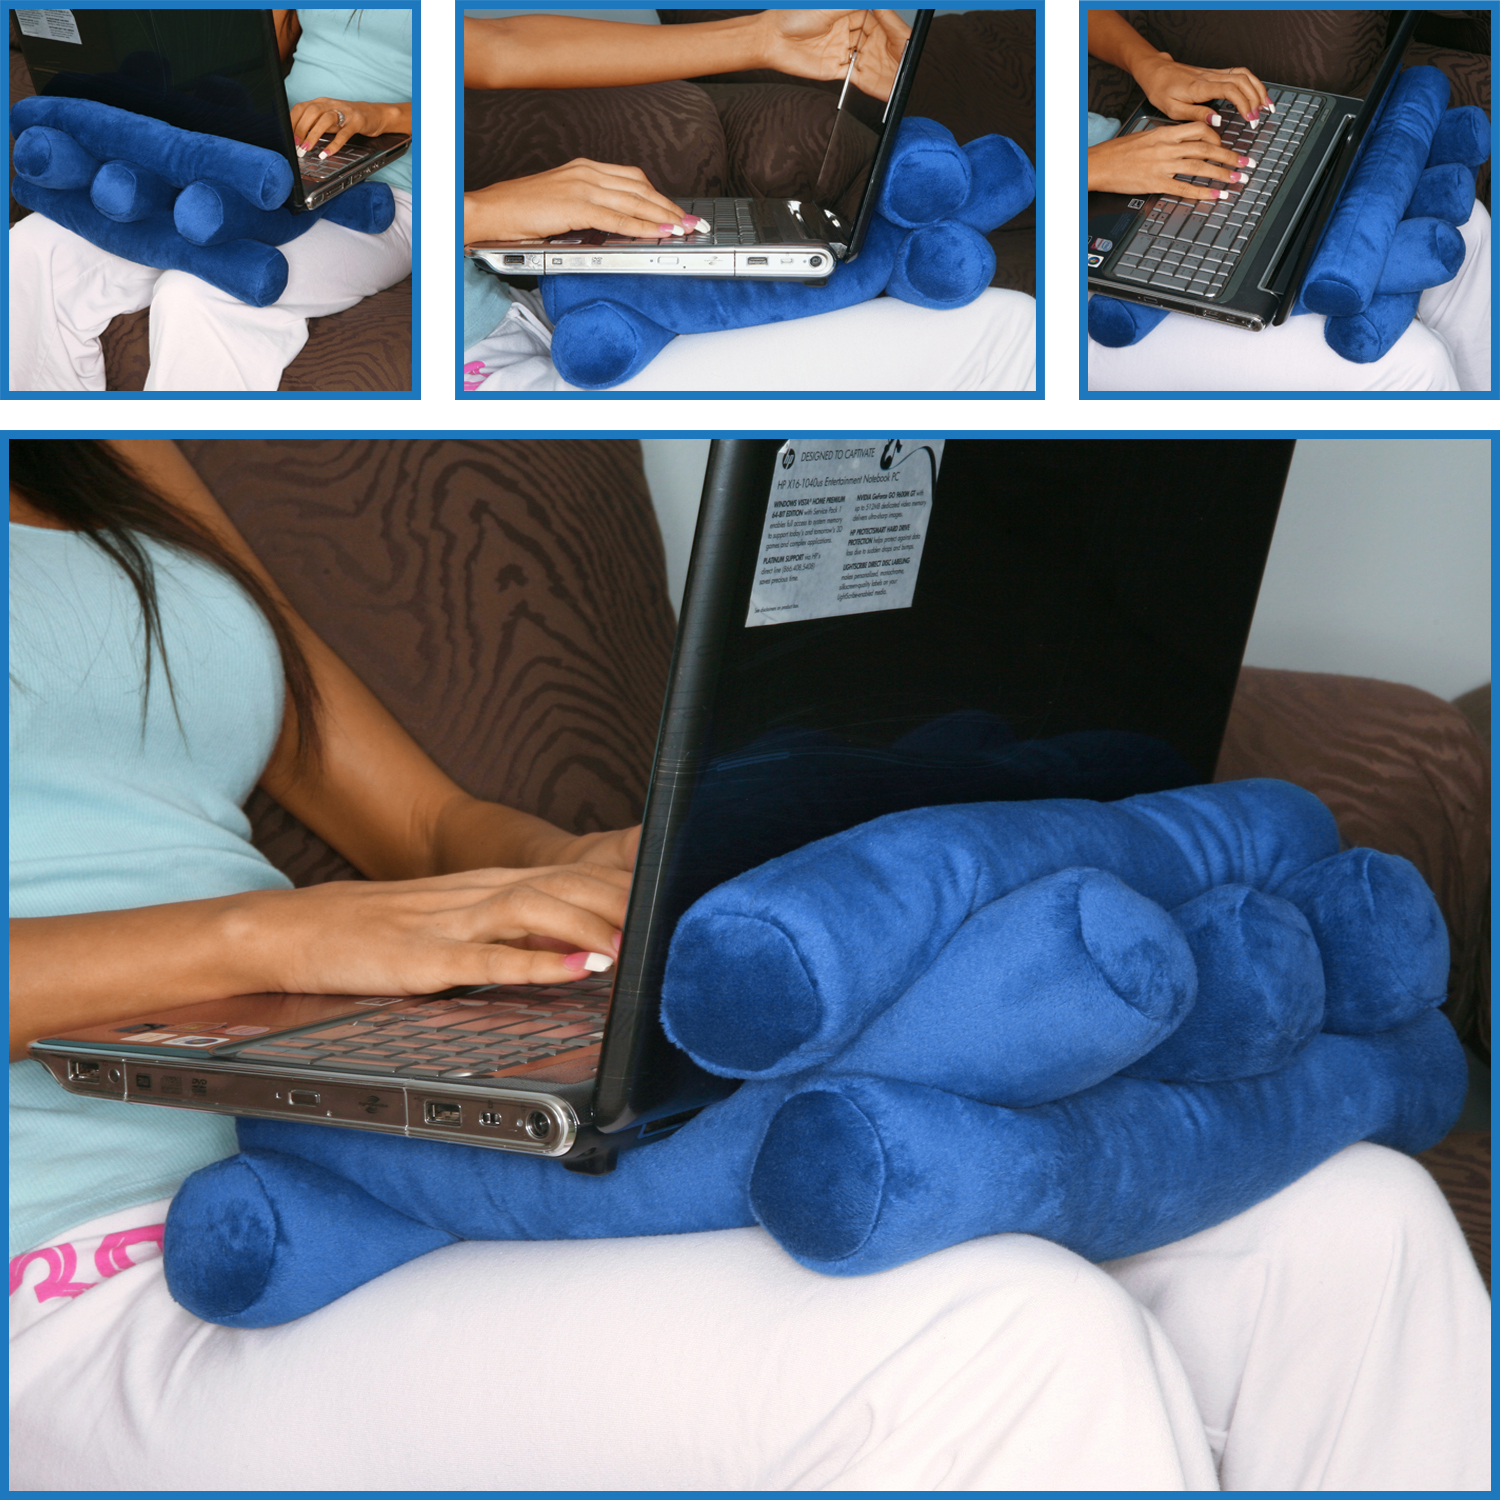 Deluxe Comfort Portable Laptop Adult and Kids Lap Desk - Blue